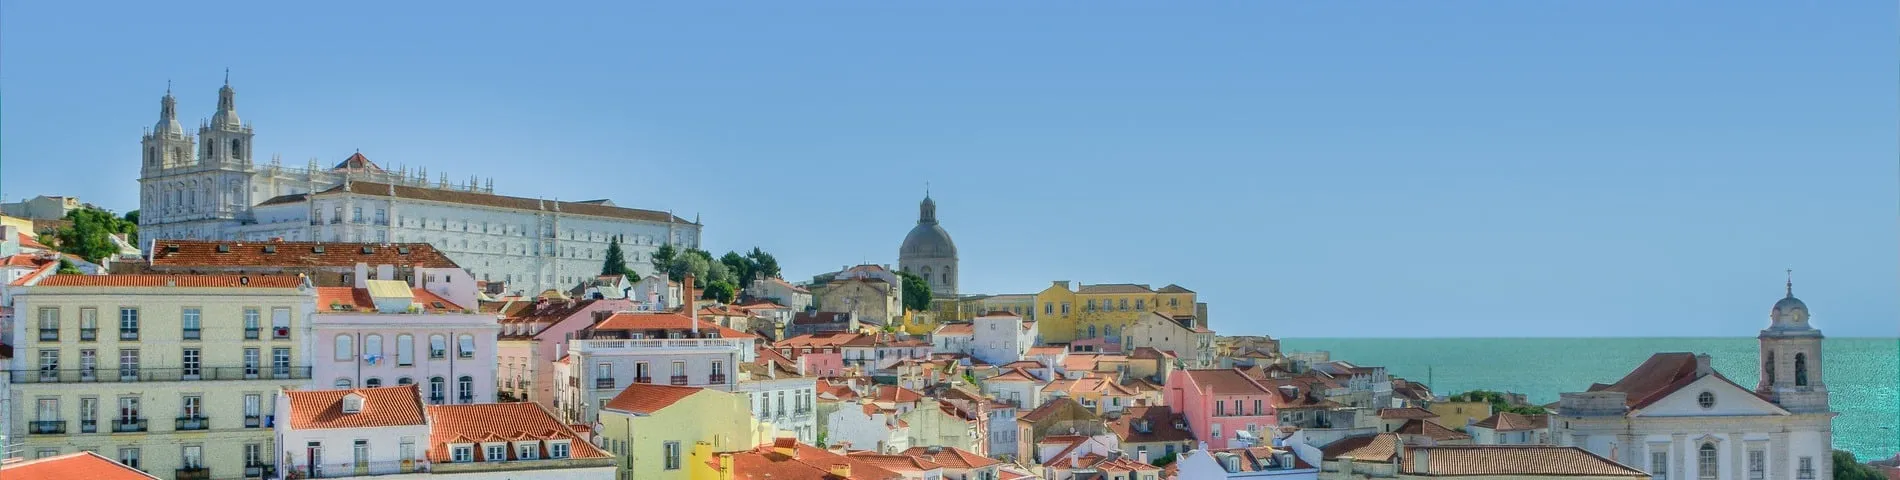 Lisbon - General